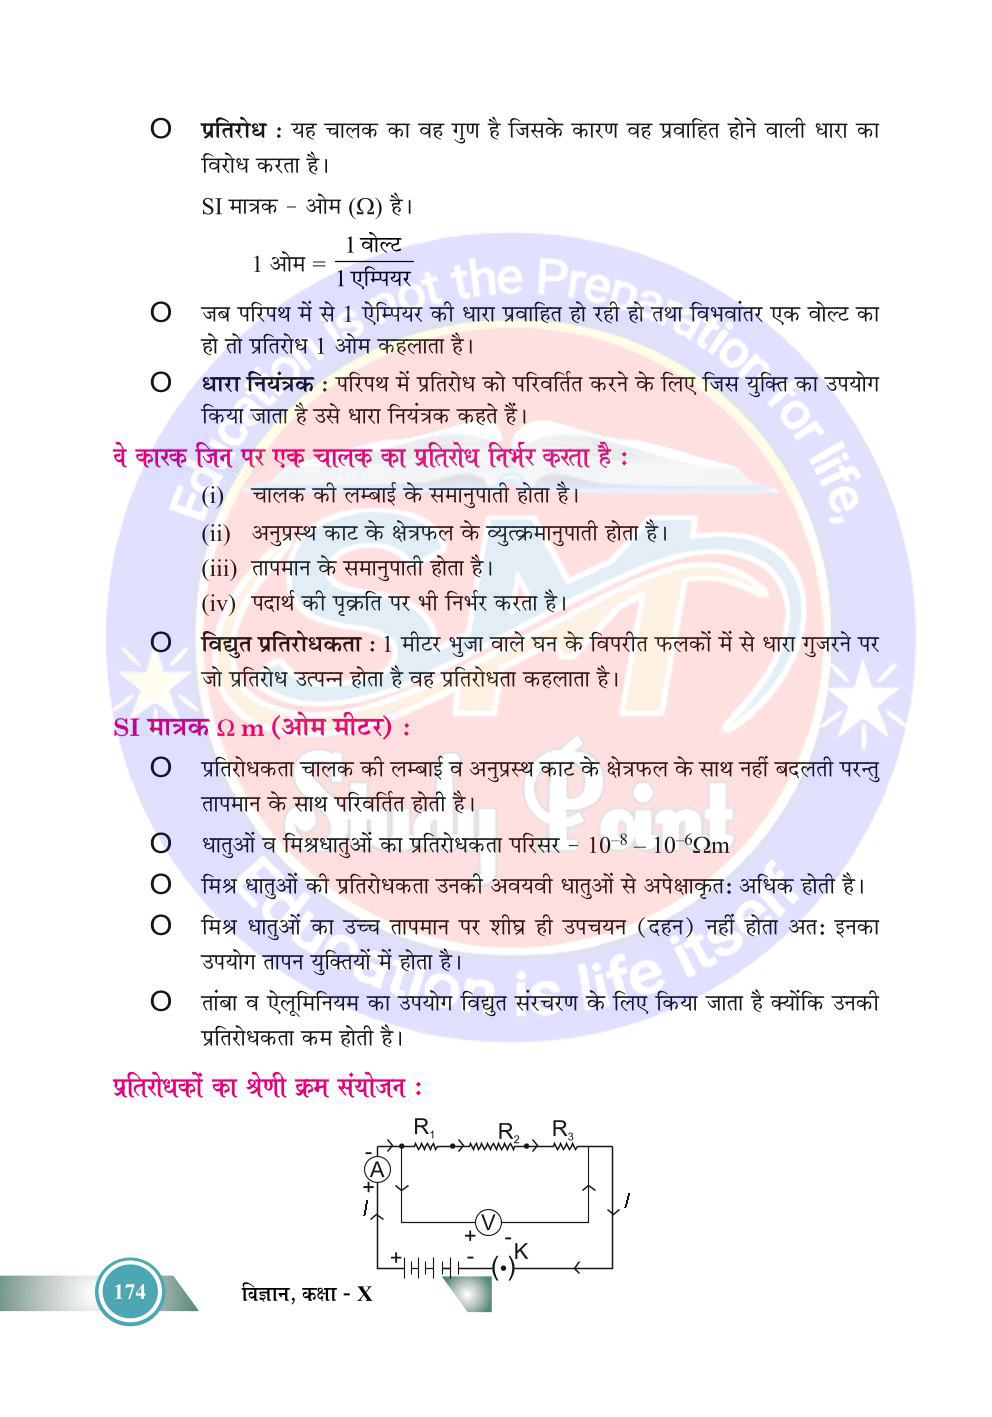 Bihar Board Class 10th Physics | Human Eye and the Colorful World | Class 10 Physics Rivision Notes PDF | मानव नेत्र तथा रंगबिरंगा संसार | बिहार बोर्ड क्लास 10वीं भौतिकी नोट्स | कक्षा 10 भौतिकी हिंदी में नोट्स